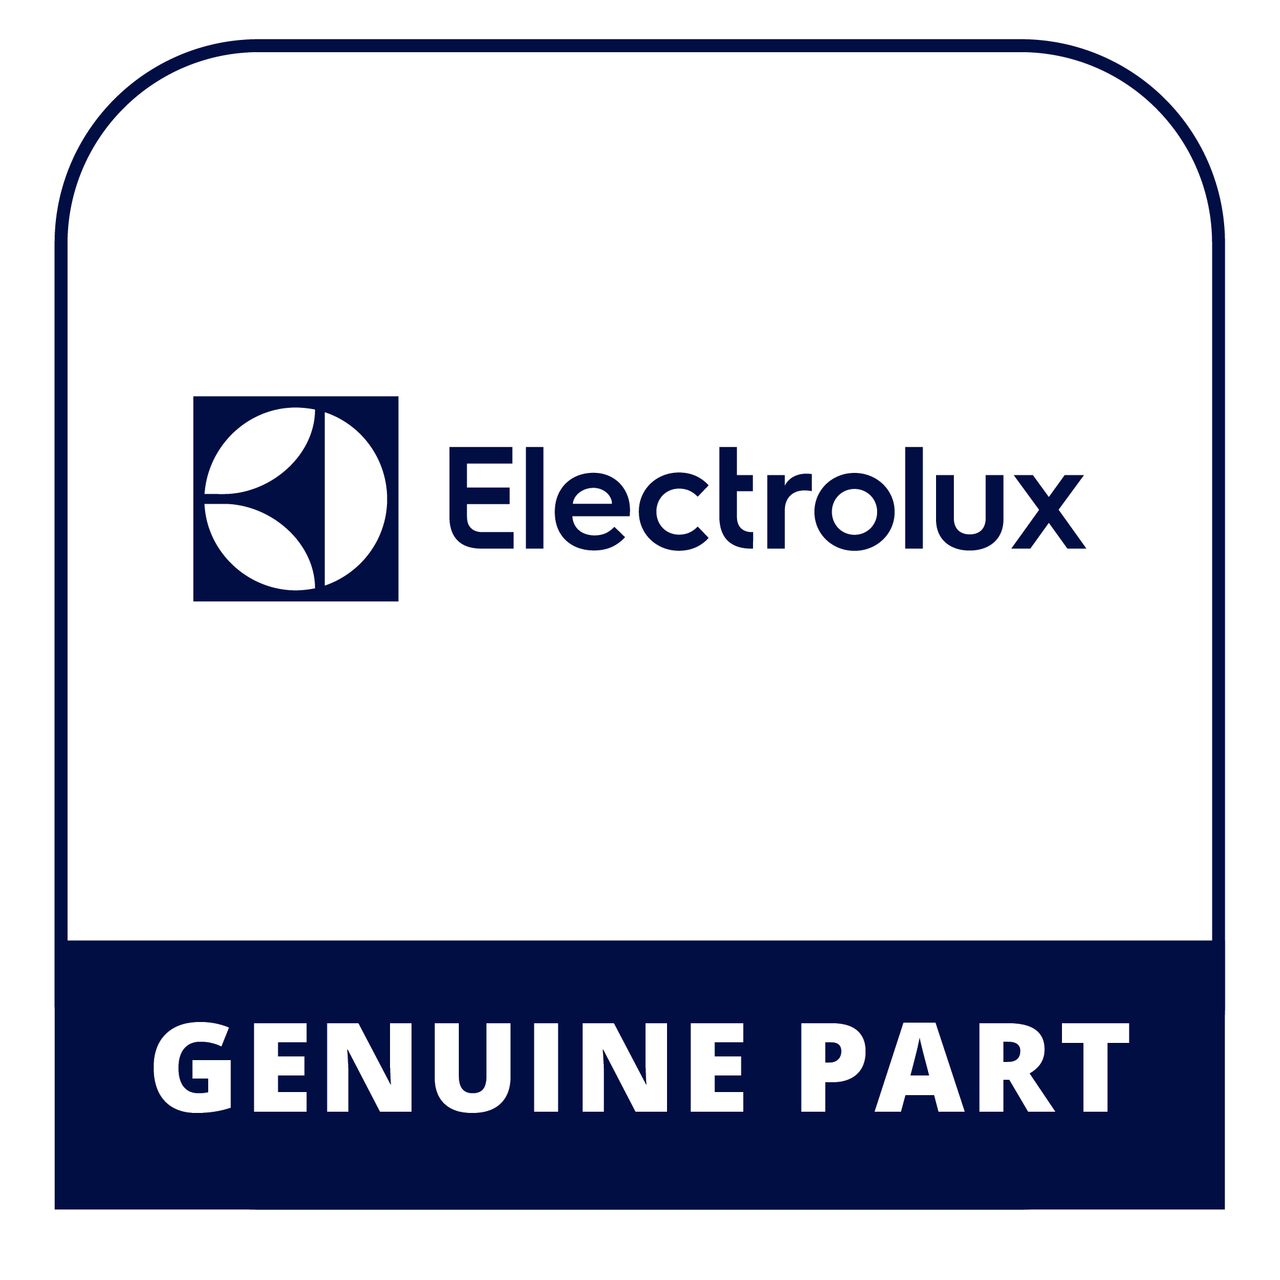 Frigidaire - Electrolux 5304501687 Control Panel - Genuine Electrolux Part